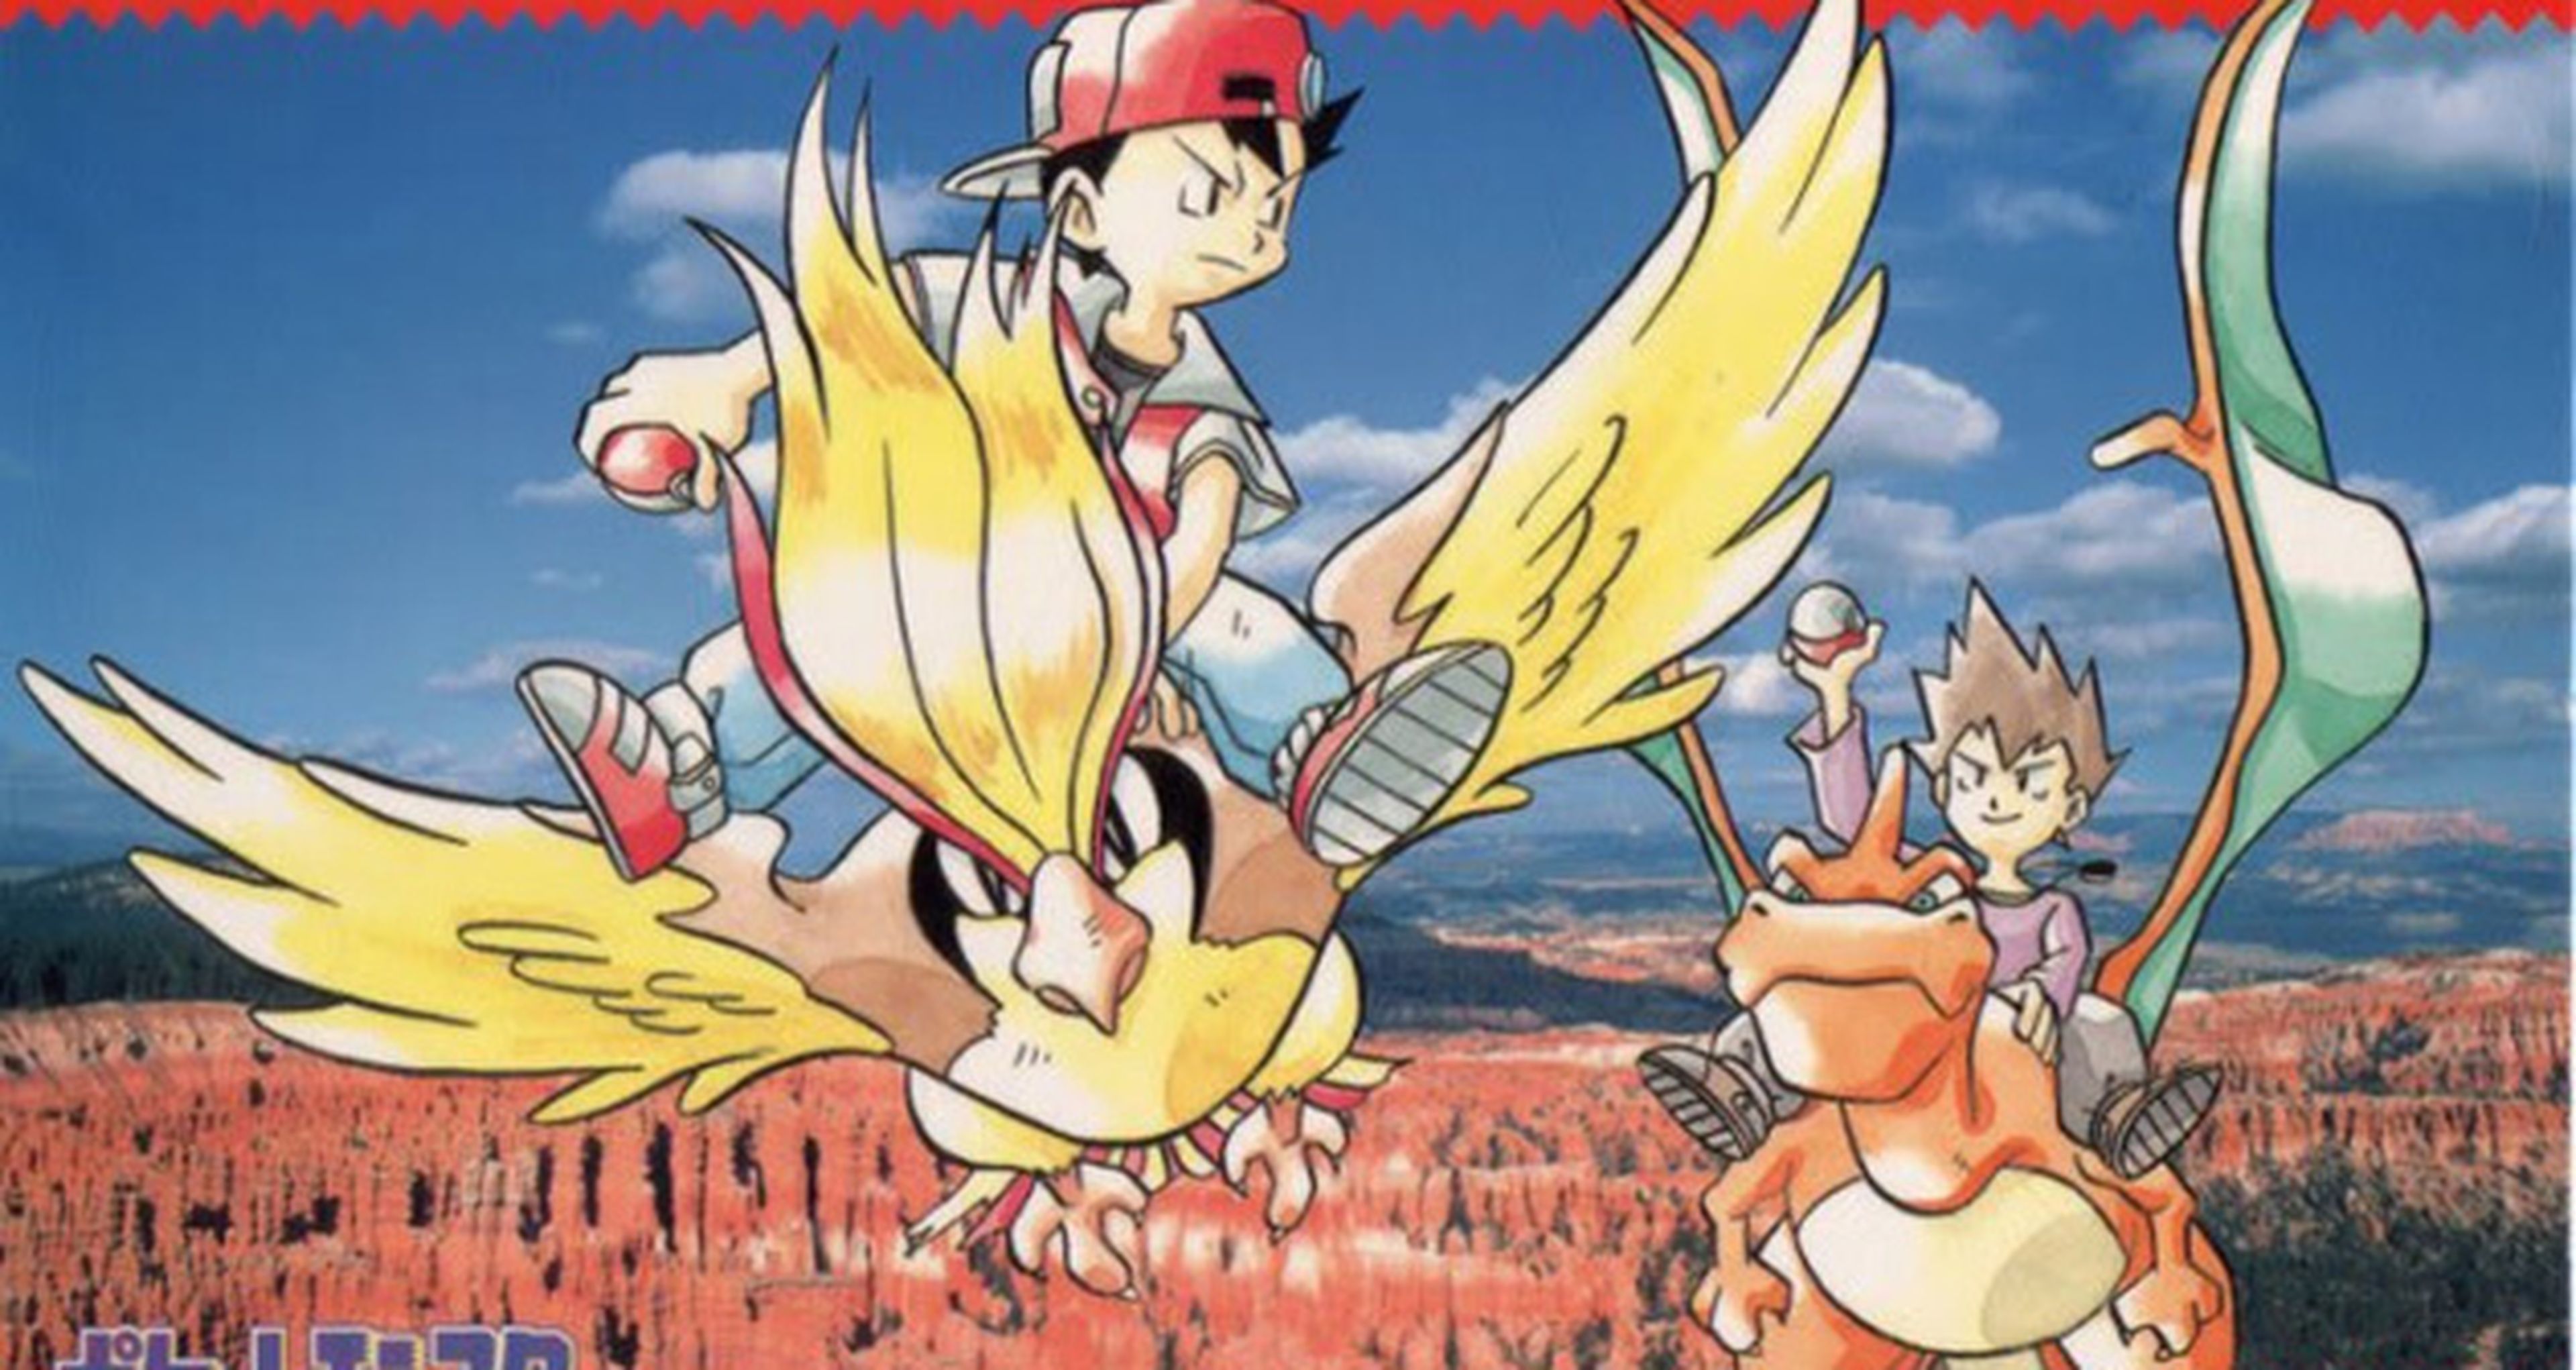 Pokémon, protagonista del Salón del Manga de Barcelona